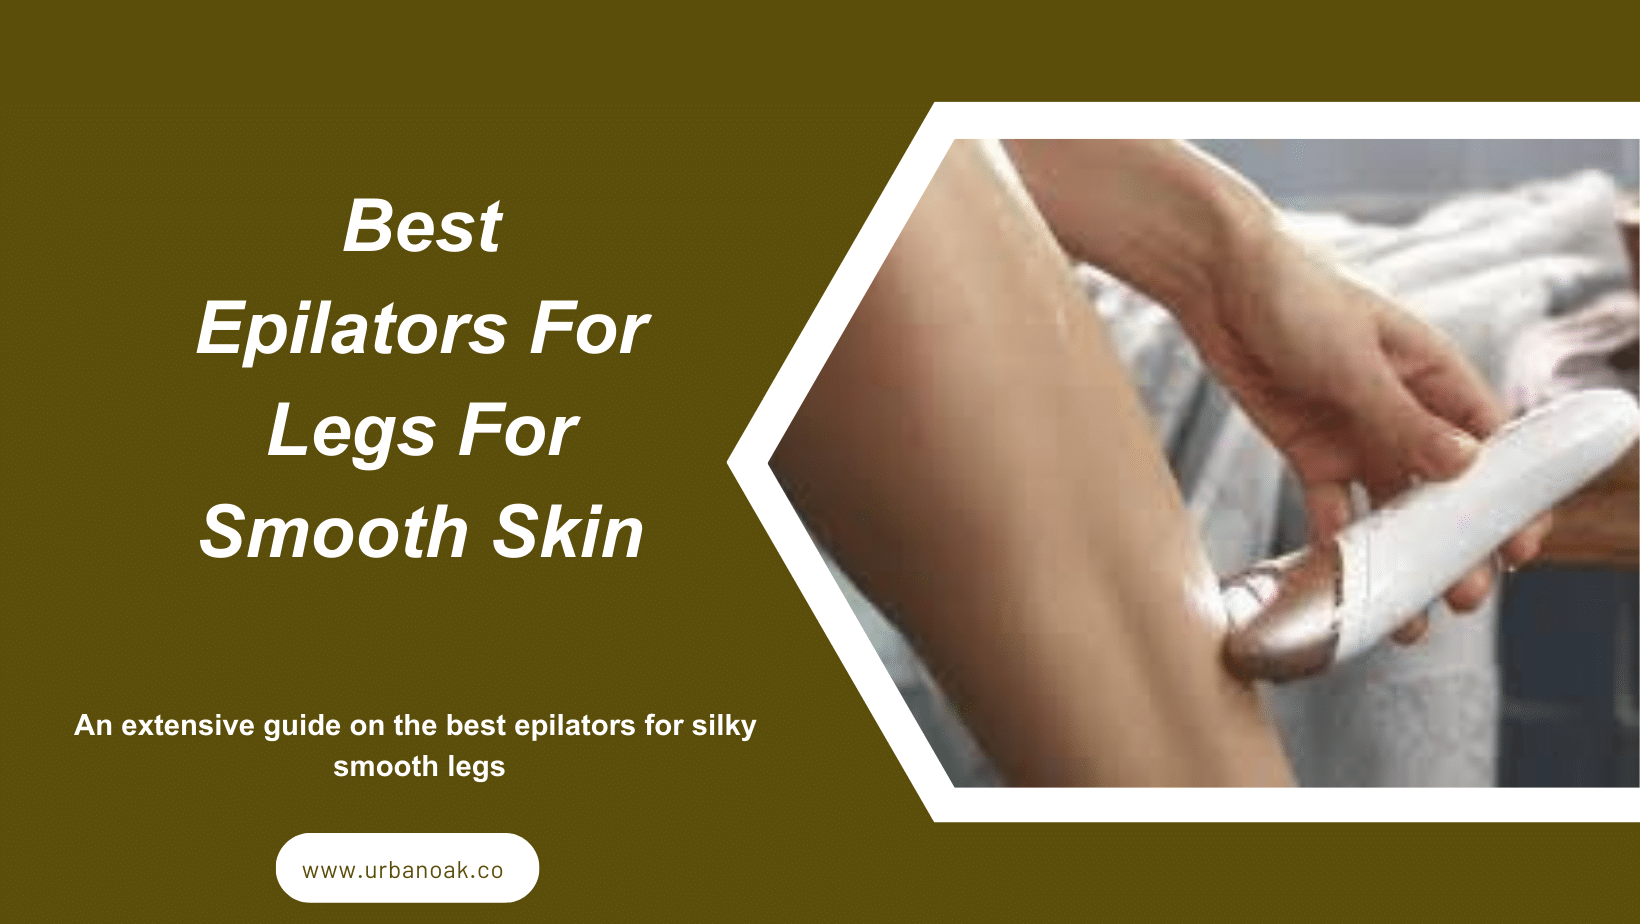 Best Epilators For Legs For Smooth Skin